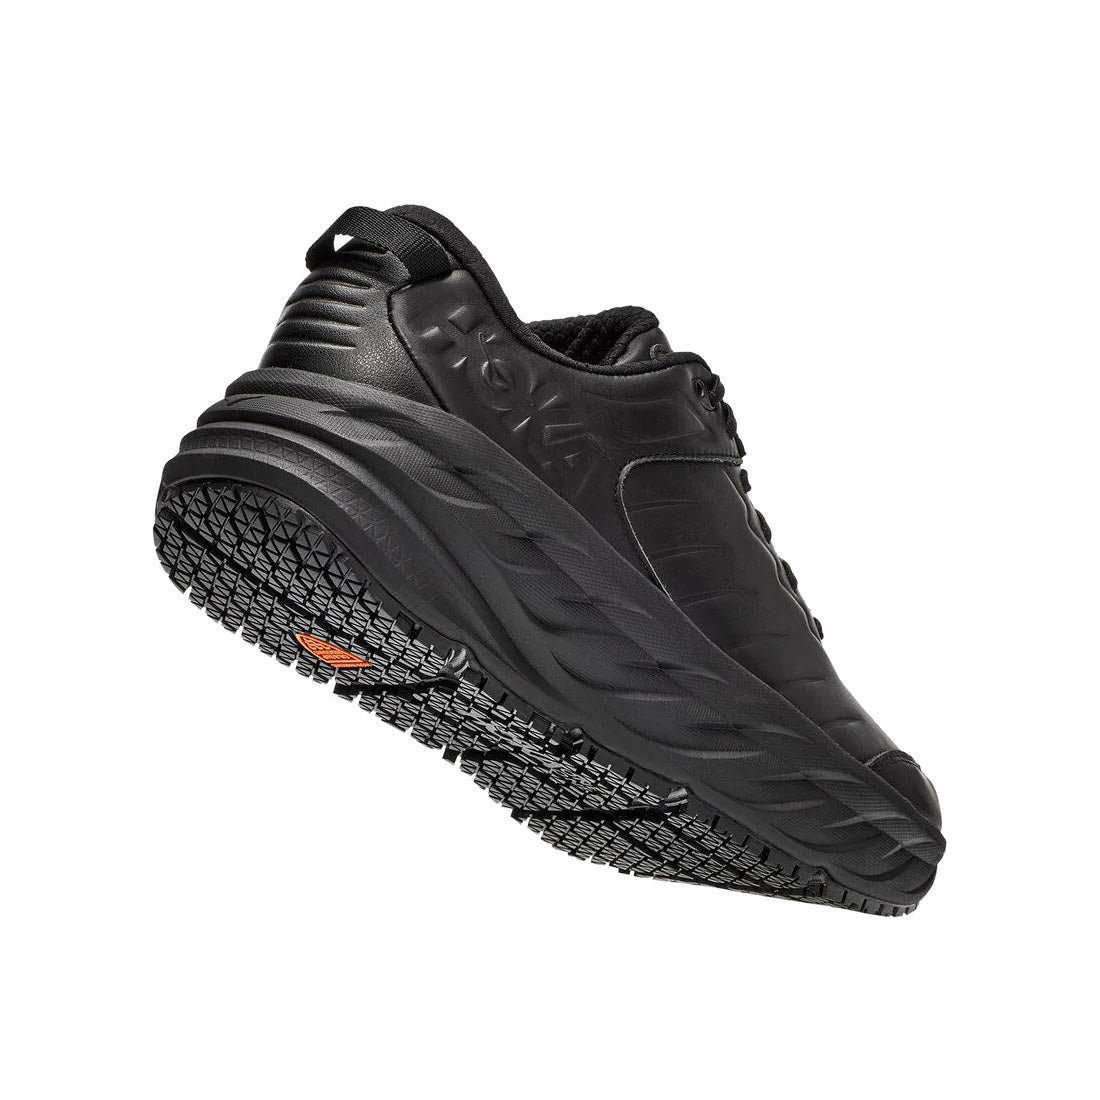 Black Hoka Bondi Leather Slip Resistant walking shoe with textured, slip-resistant sole on a white background.